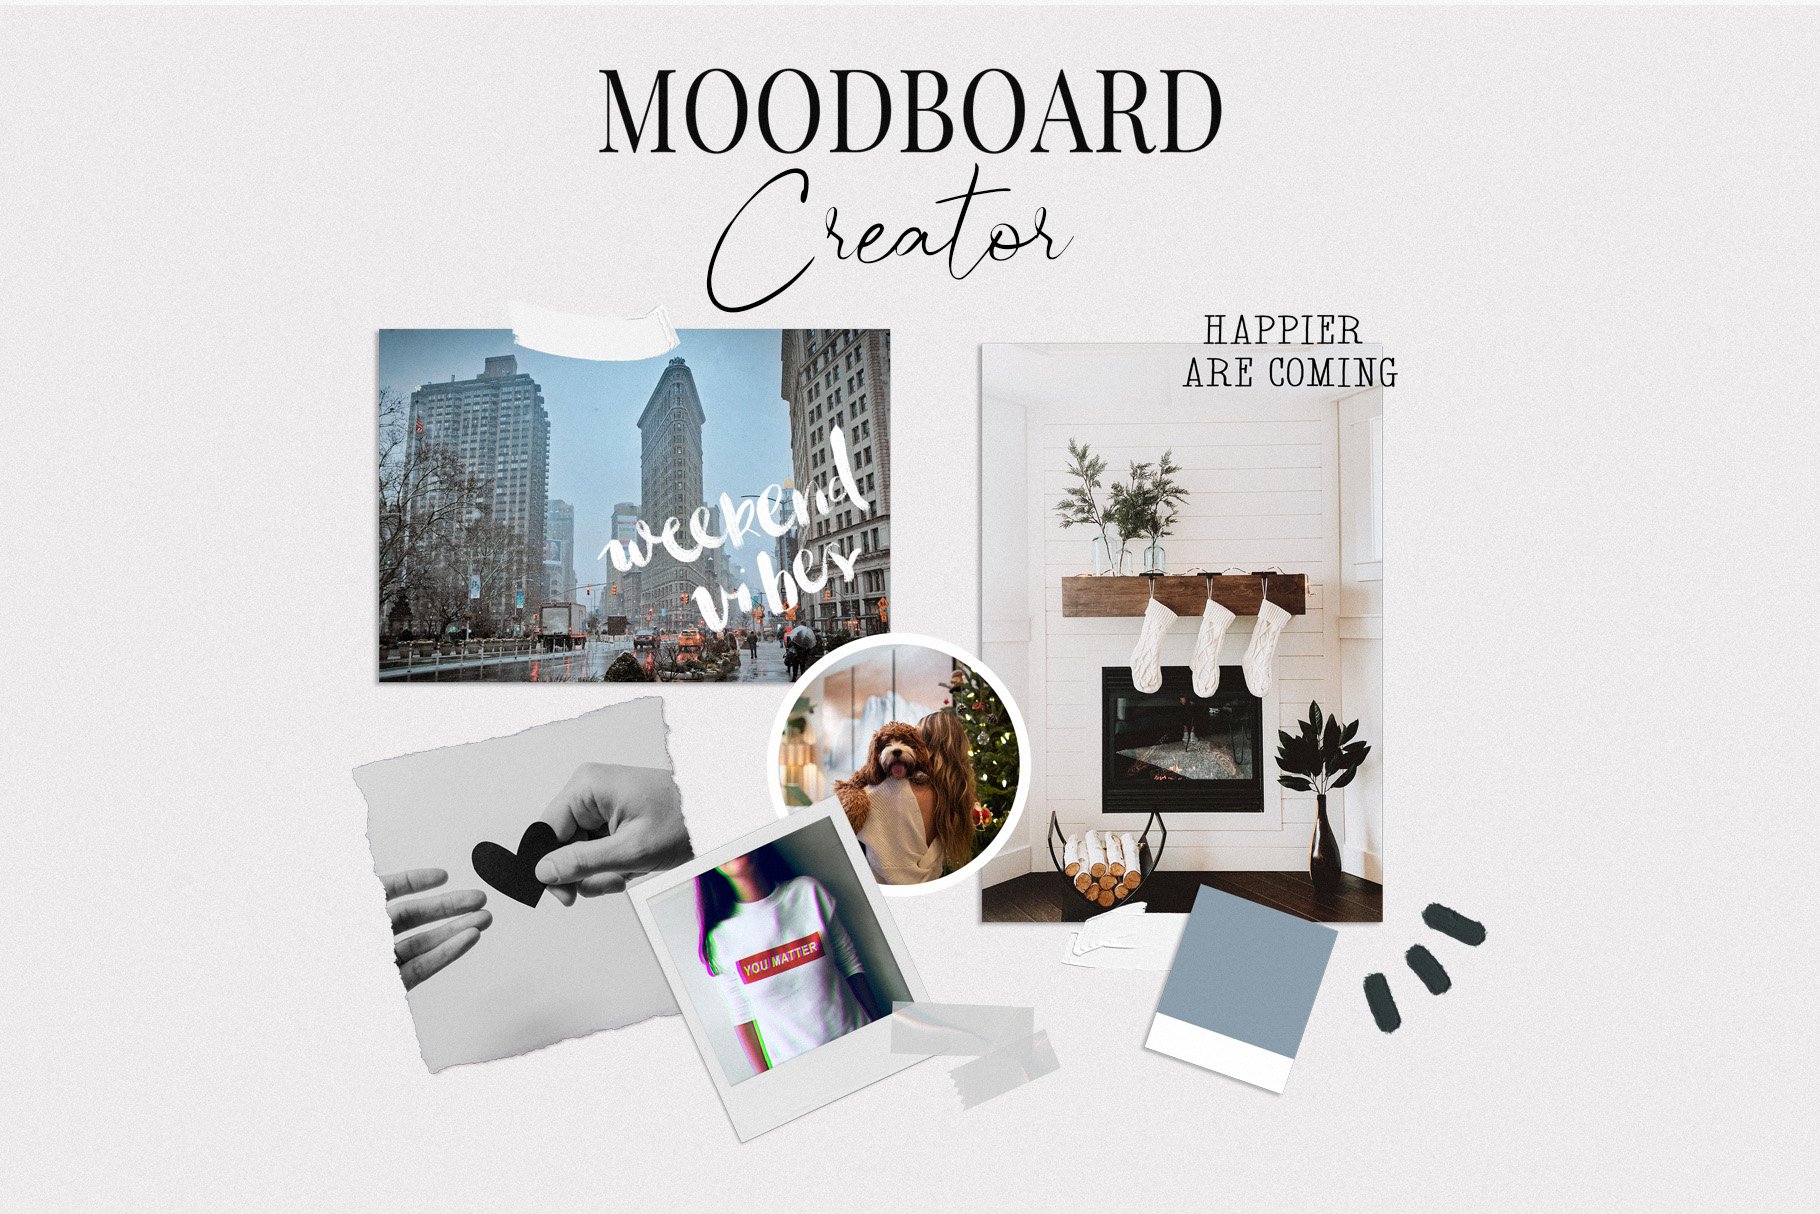 Mood board Scene creator kit cover image.